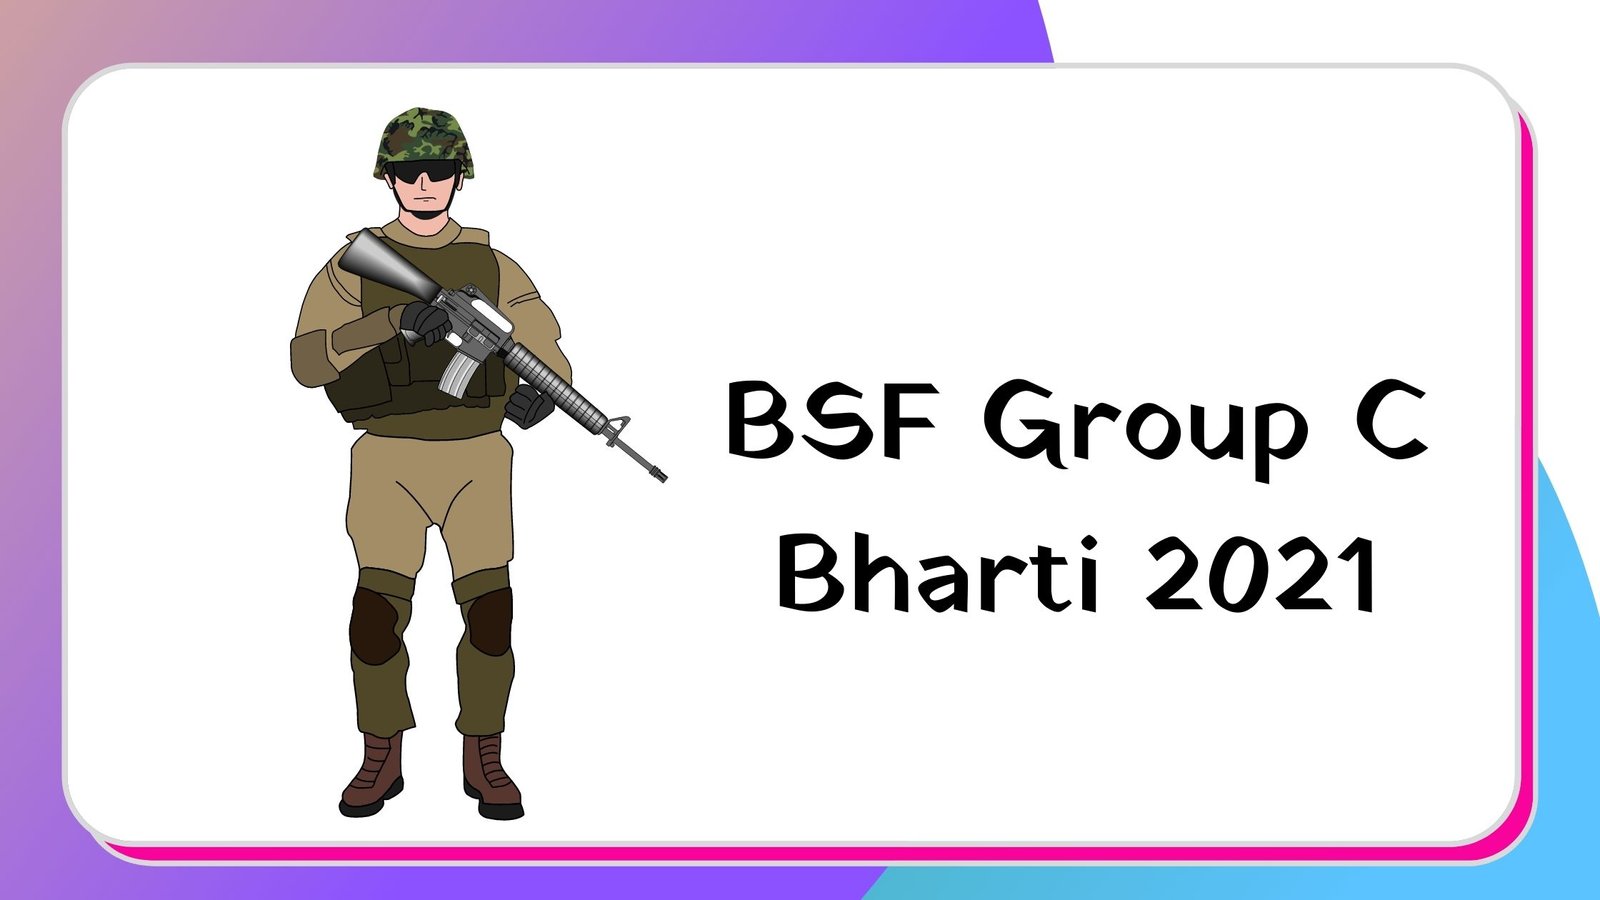 BSF Group C Bharti 2021